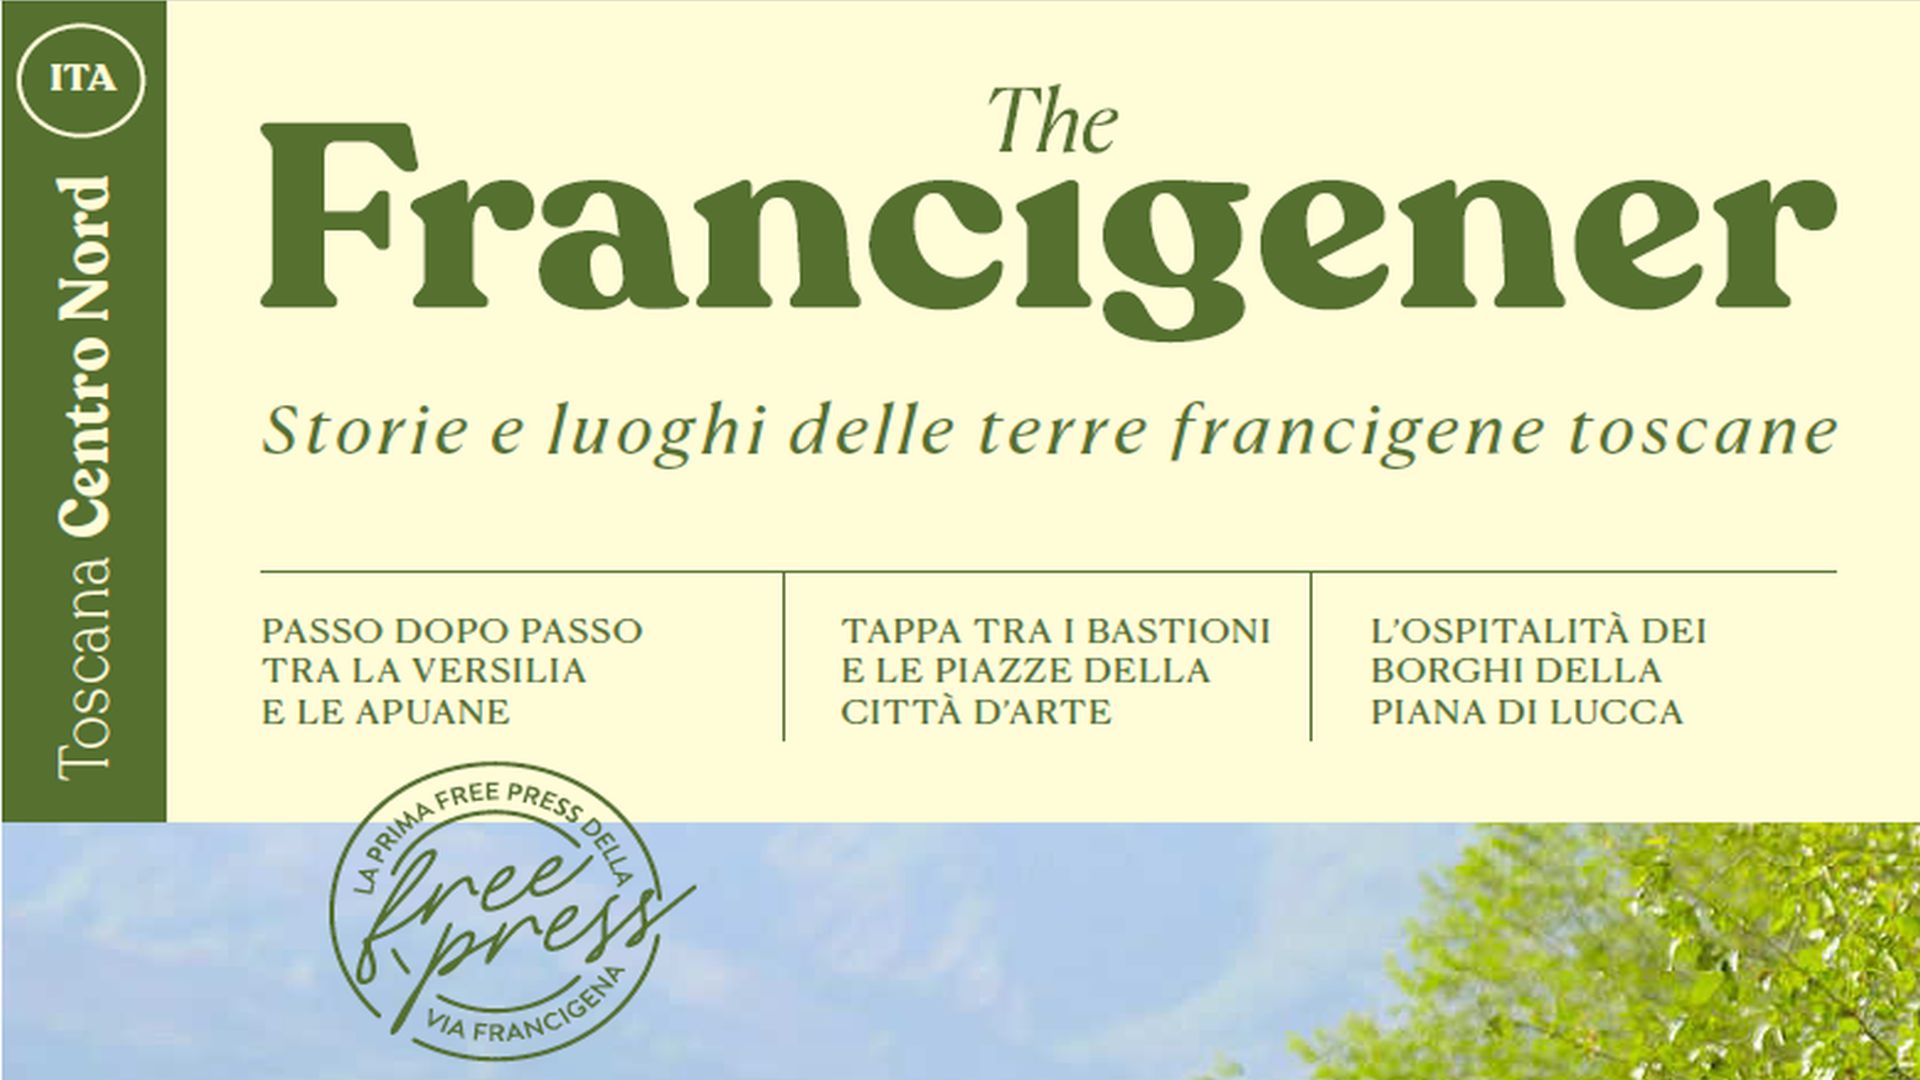 the francigena magazine cover